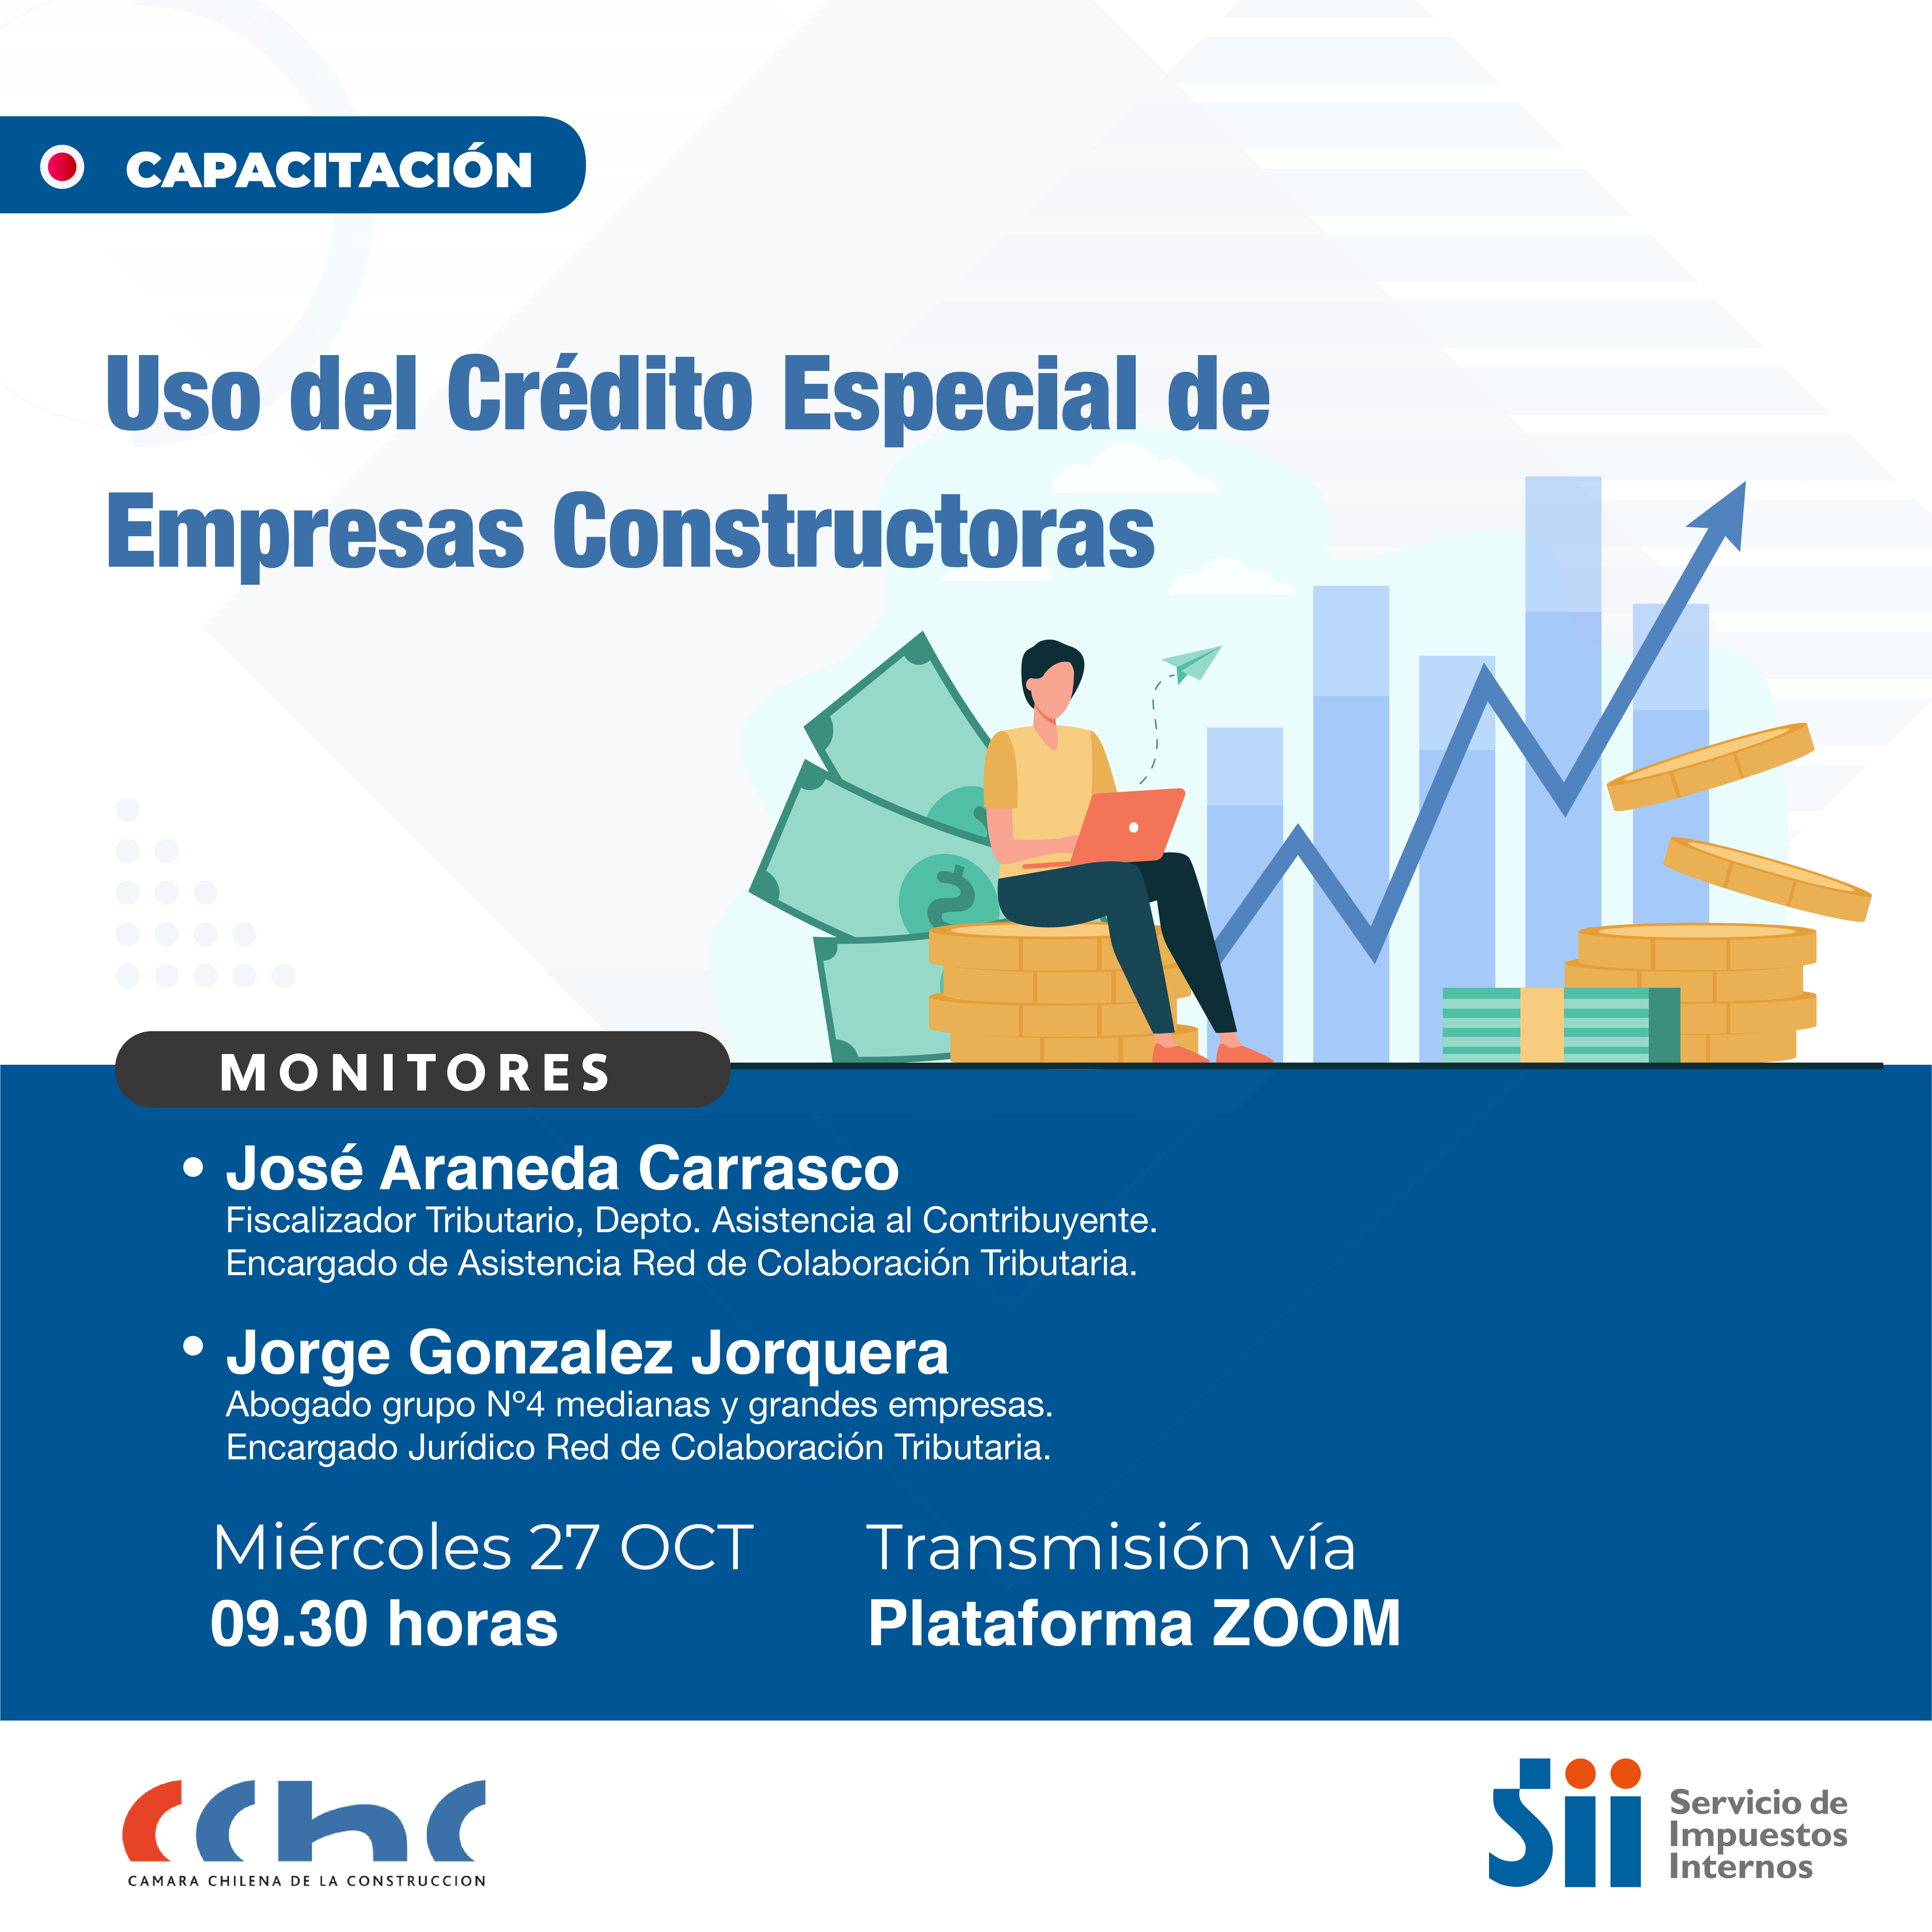 CreditoEmpresas_CAPACITACIO%CC%81N.png